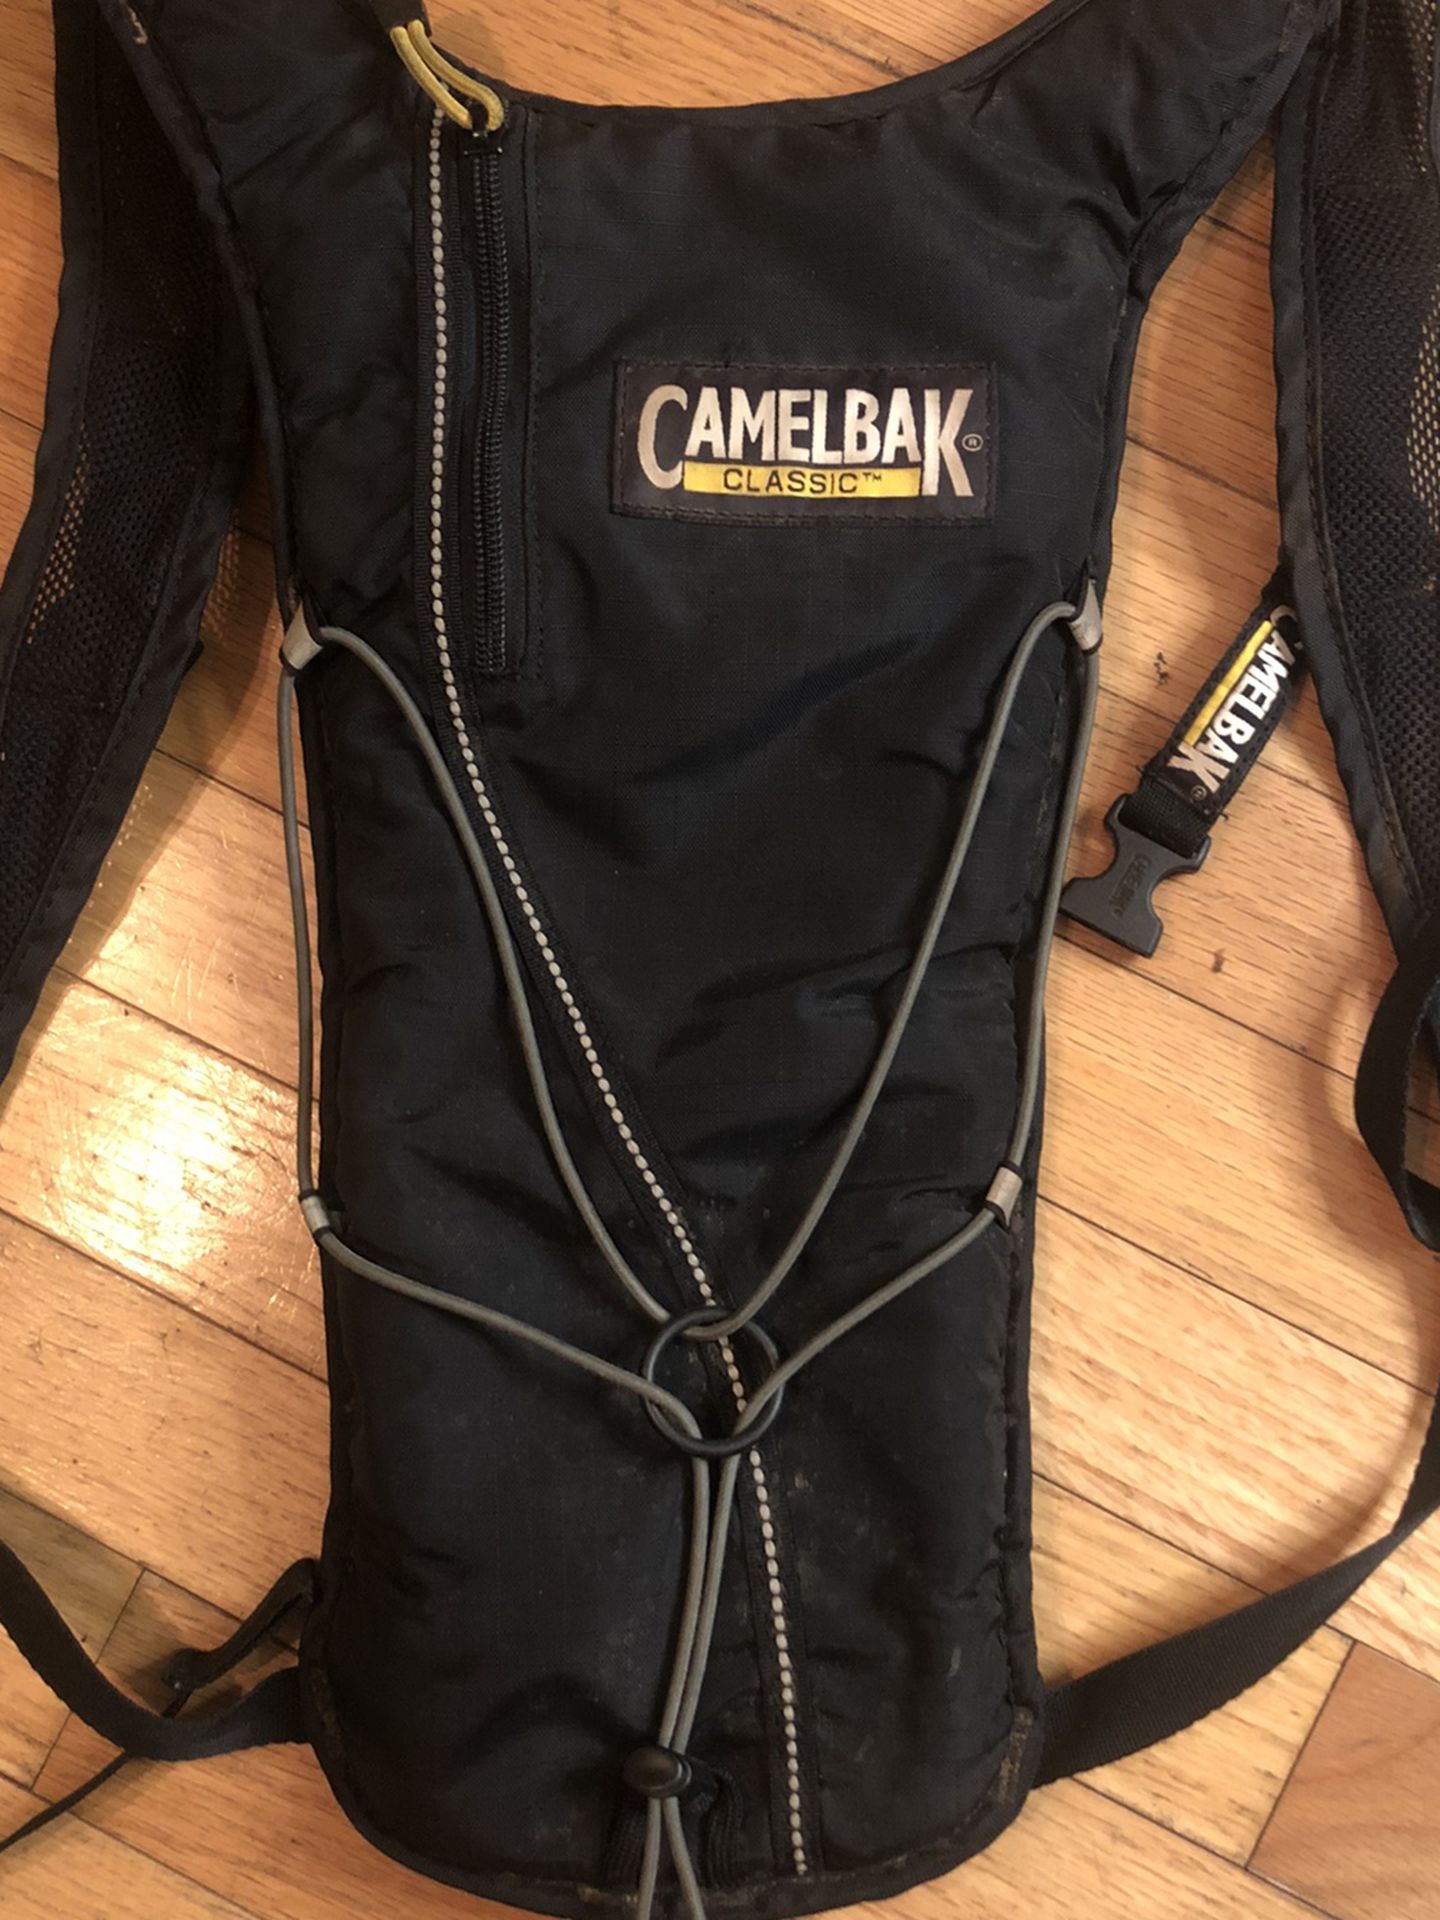 Camelbak Classic Hydration Pack